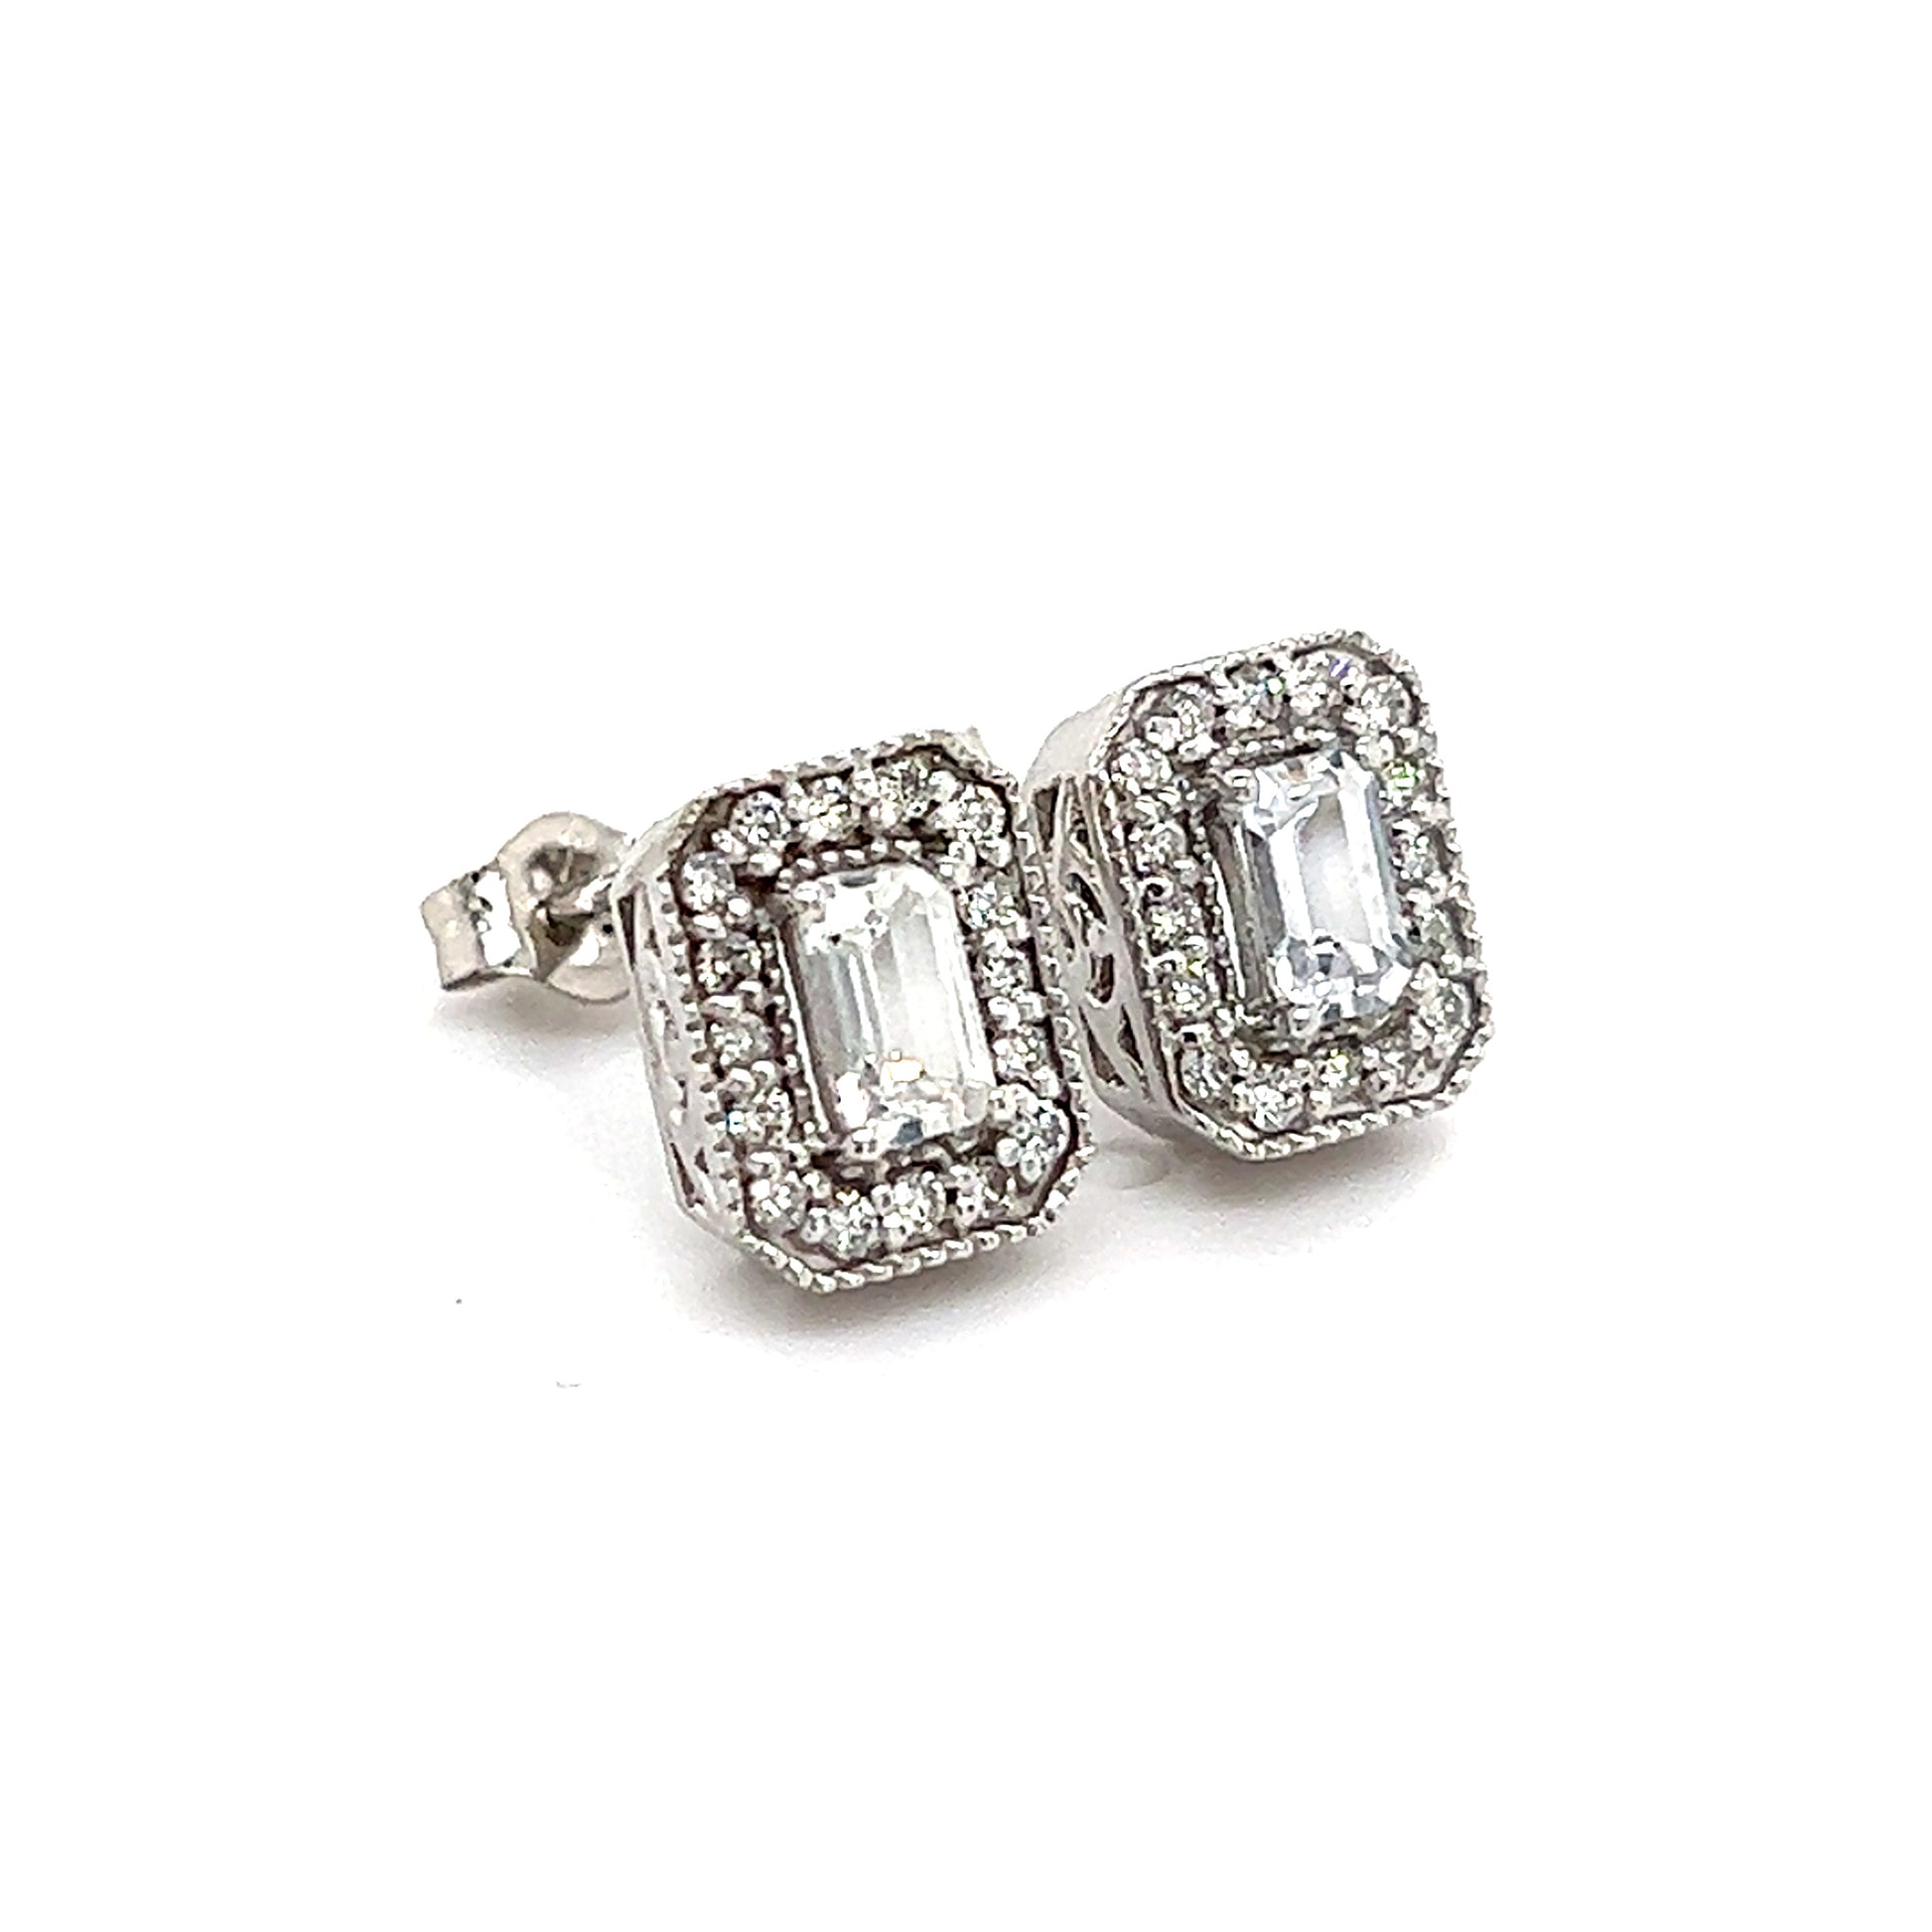 Natural Sapphire Diamond Stud Earrings 14k W Gold 0.96 TCW Certified $2950 121268 - Certified Estate Jewelry